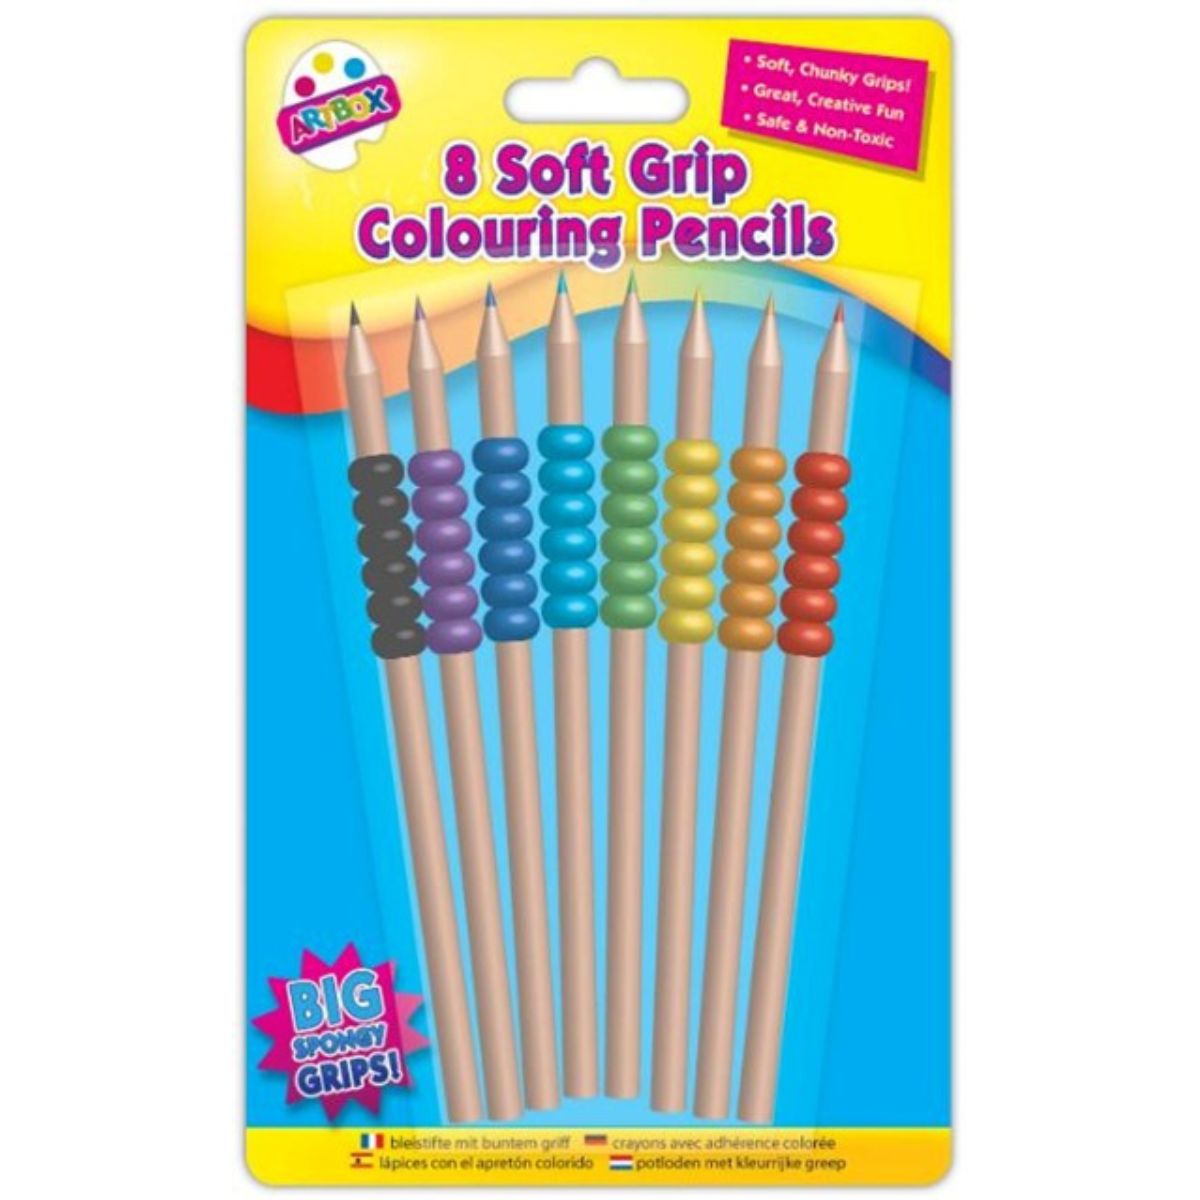 8 Soft Grip Colouring Pencils